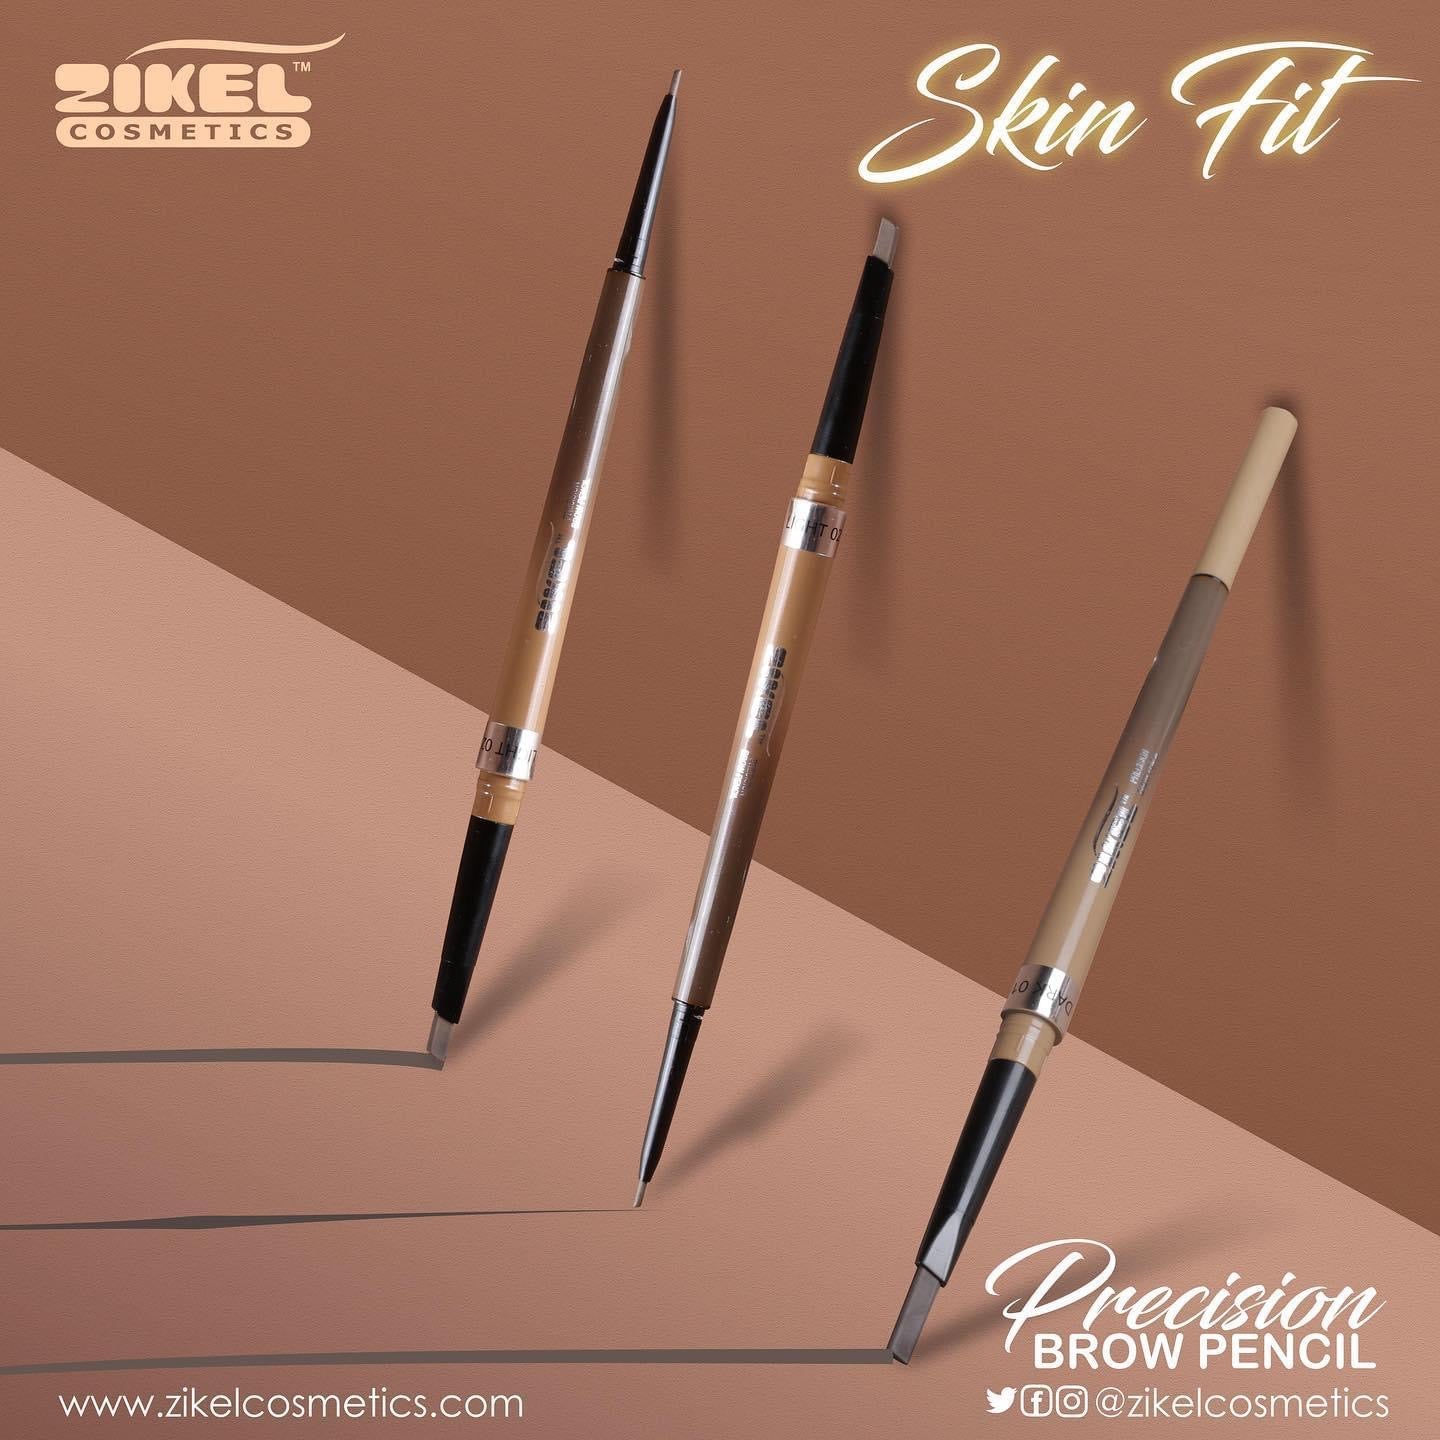 Zikel Skinfit Precision Eyebrow Pencil